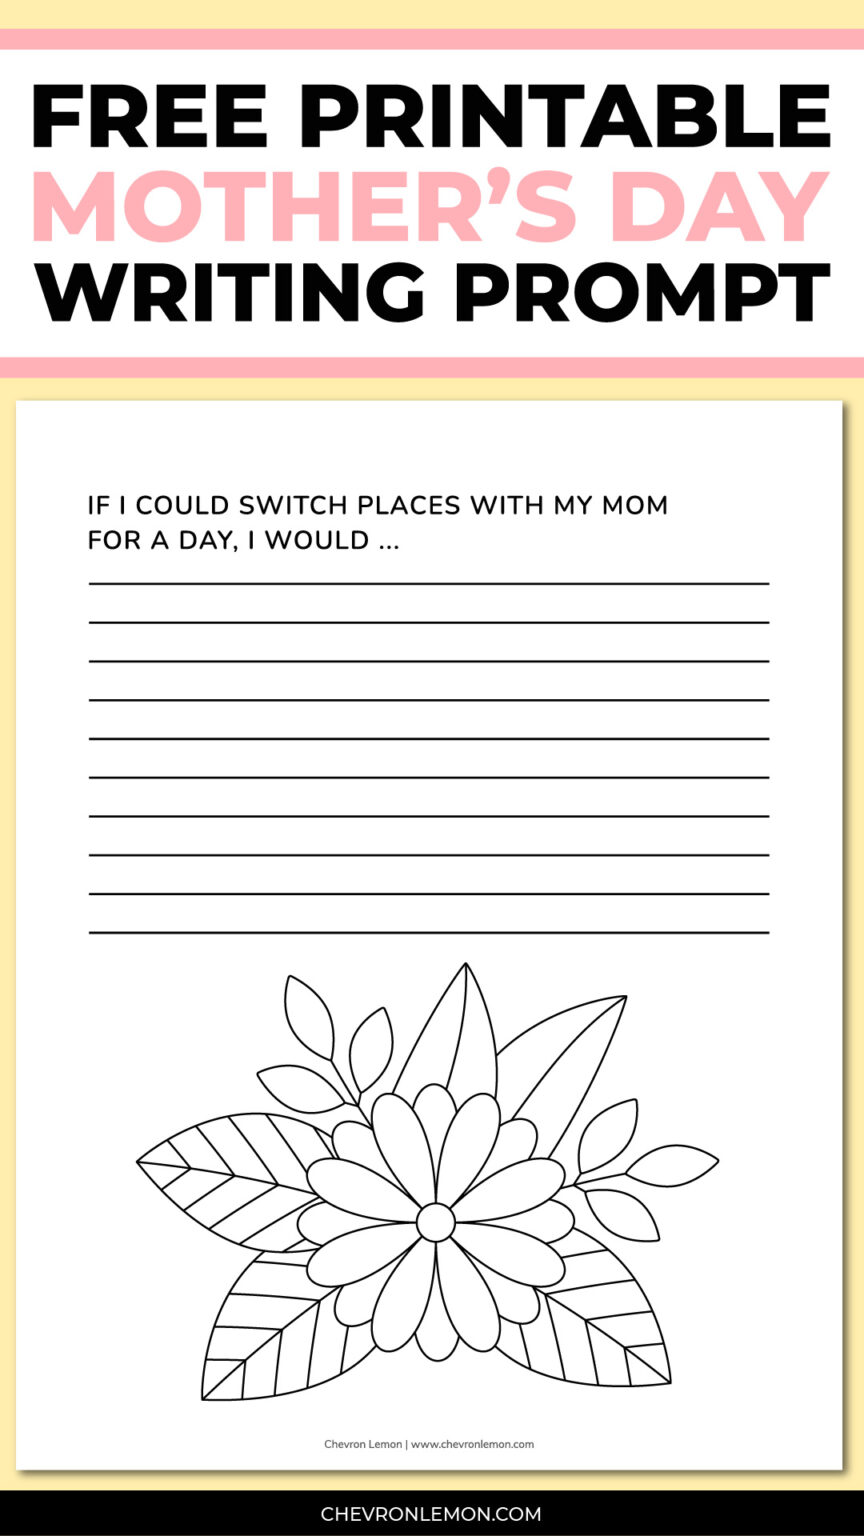 printable-mother-s-day-writing-prompt-chevron-lemon